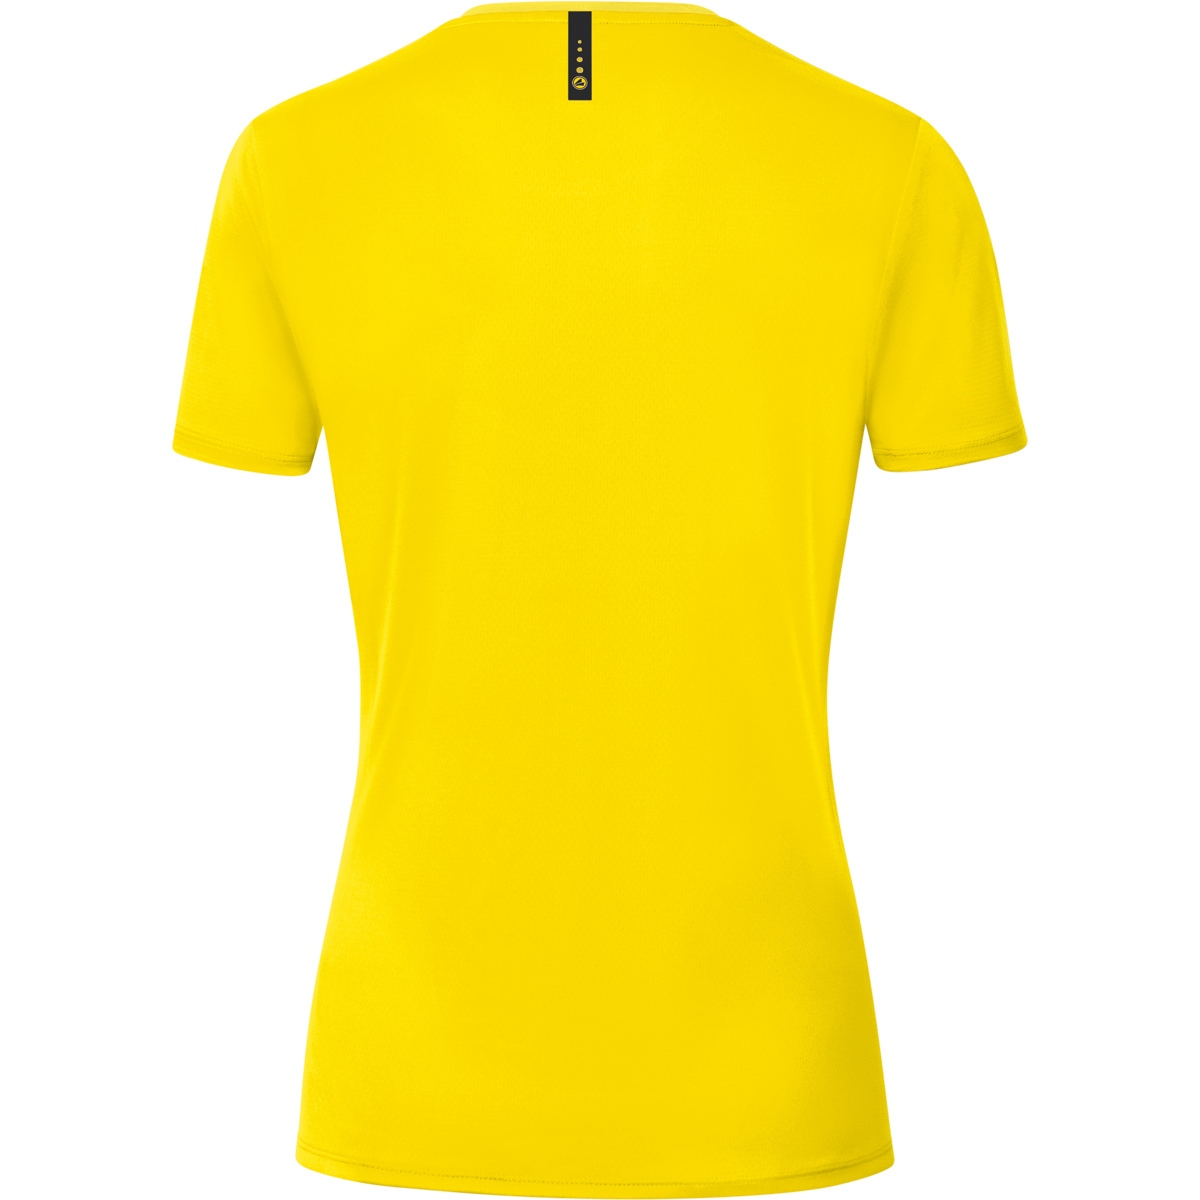 JAKO T-Shirt 34, 6120 citro/citro light, Champ Damen, Gr. 2.0